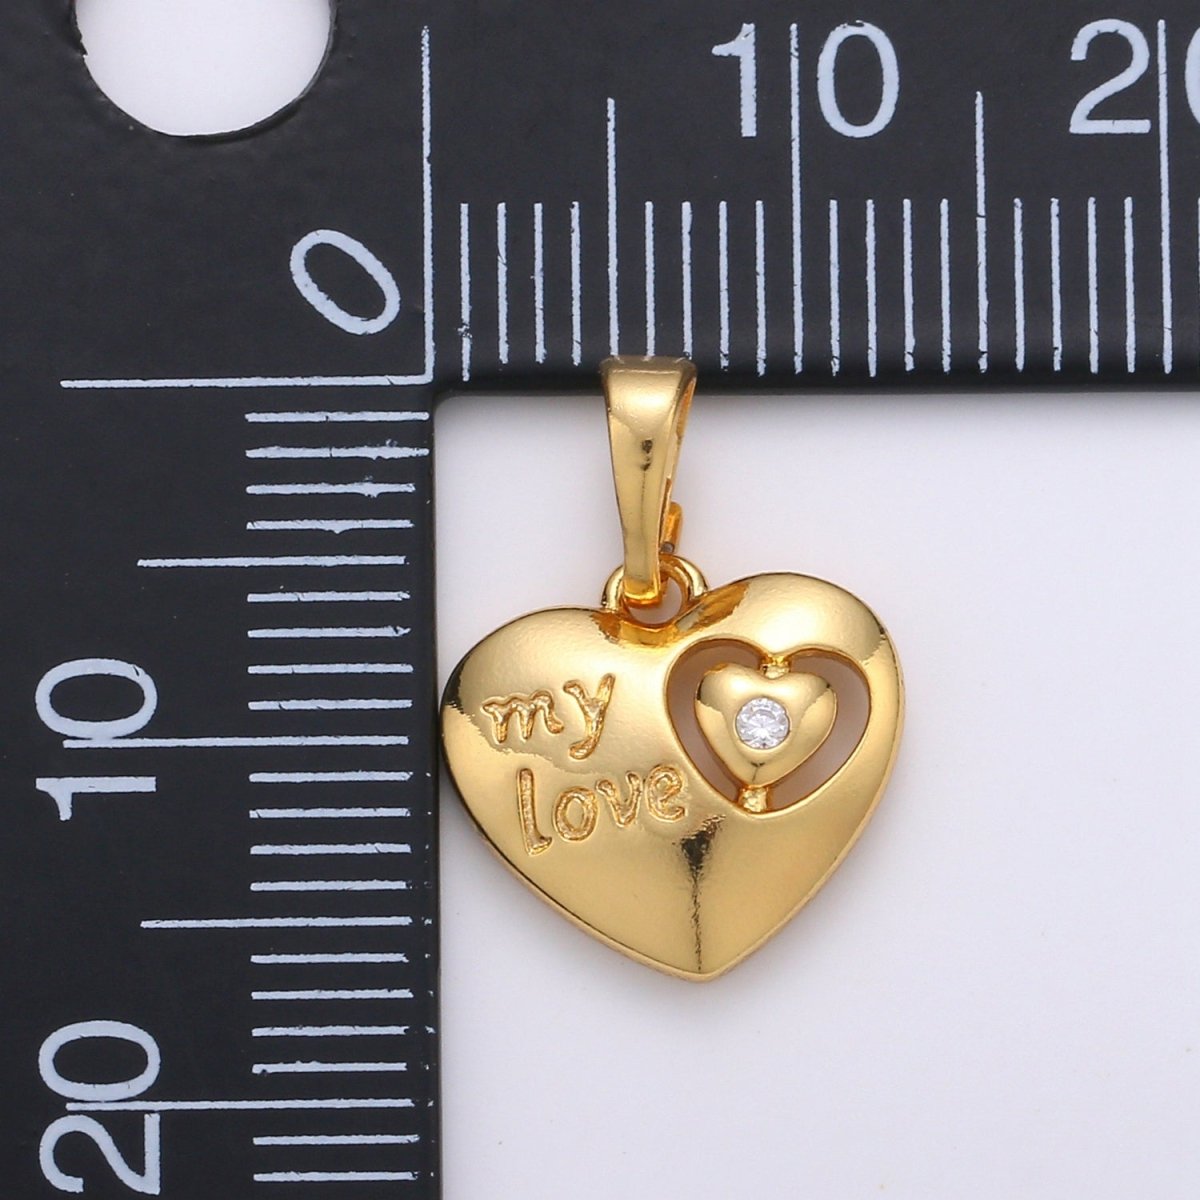 Gold Filled My Love Heart Pendants J-082 - DLUXCA